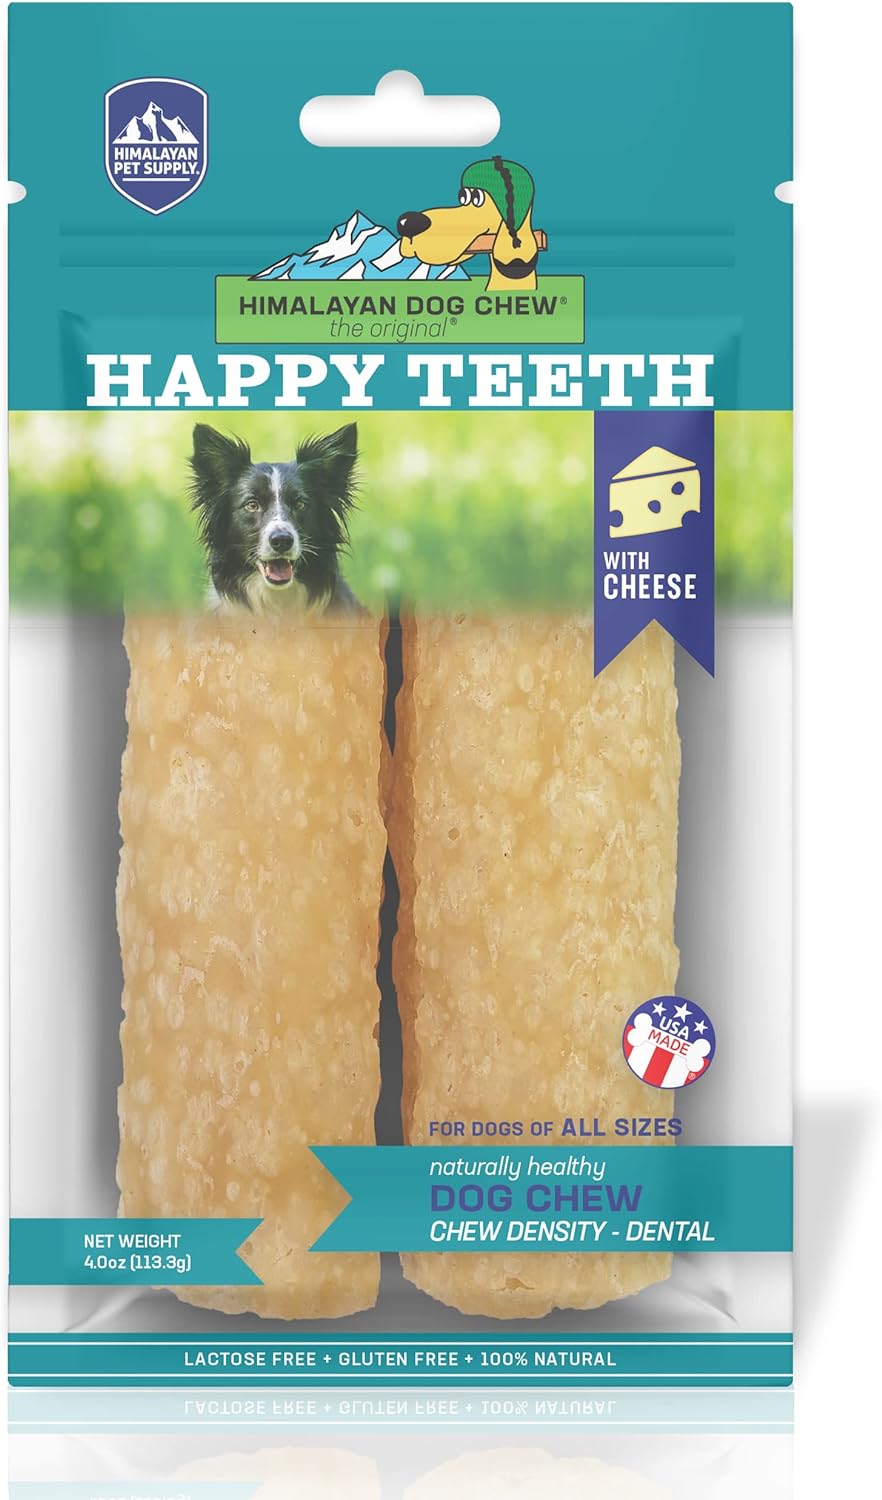 Himalayan Dog Chew Happy Teeth Yak Cheese Dog Chews Dental Chews, 100% Natural, Long Lasting, Gluten Free, Healthy & Safe Dog Treats for Oral Health, Lactose & Grain Free, Protein Rich, 2 Chews